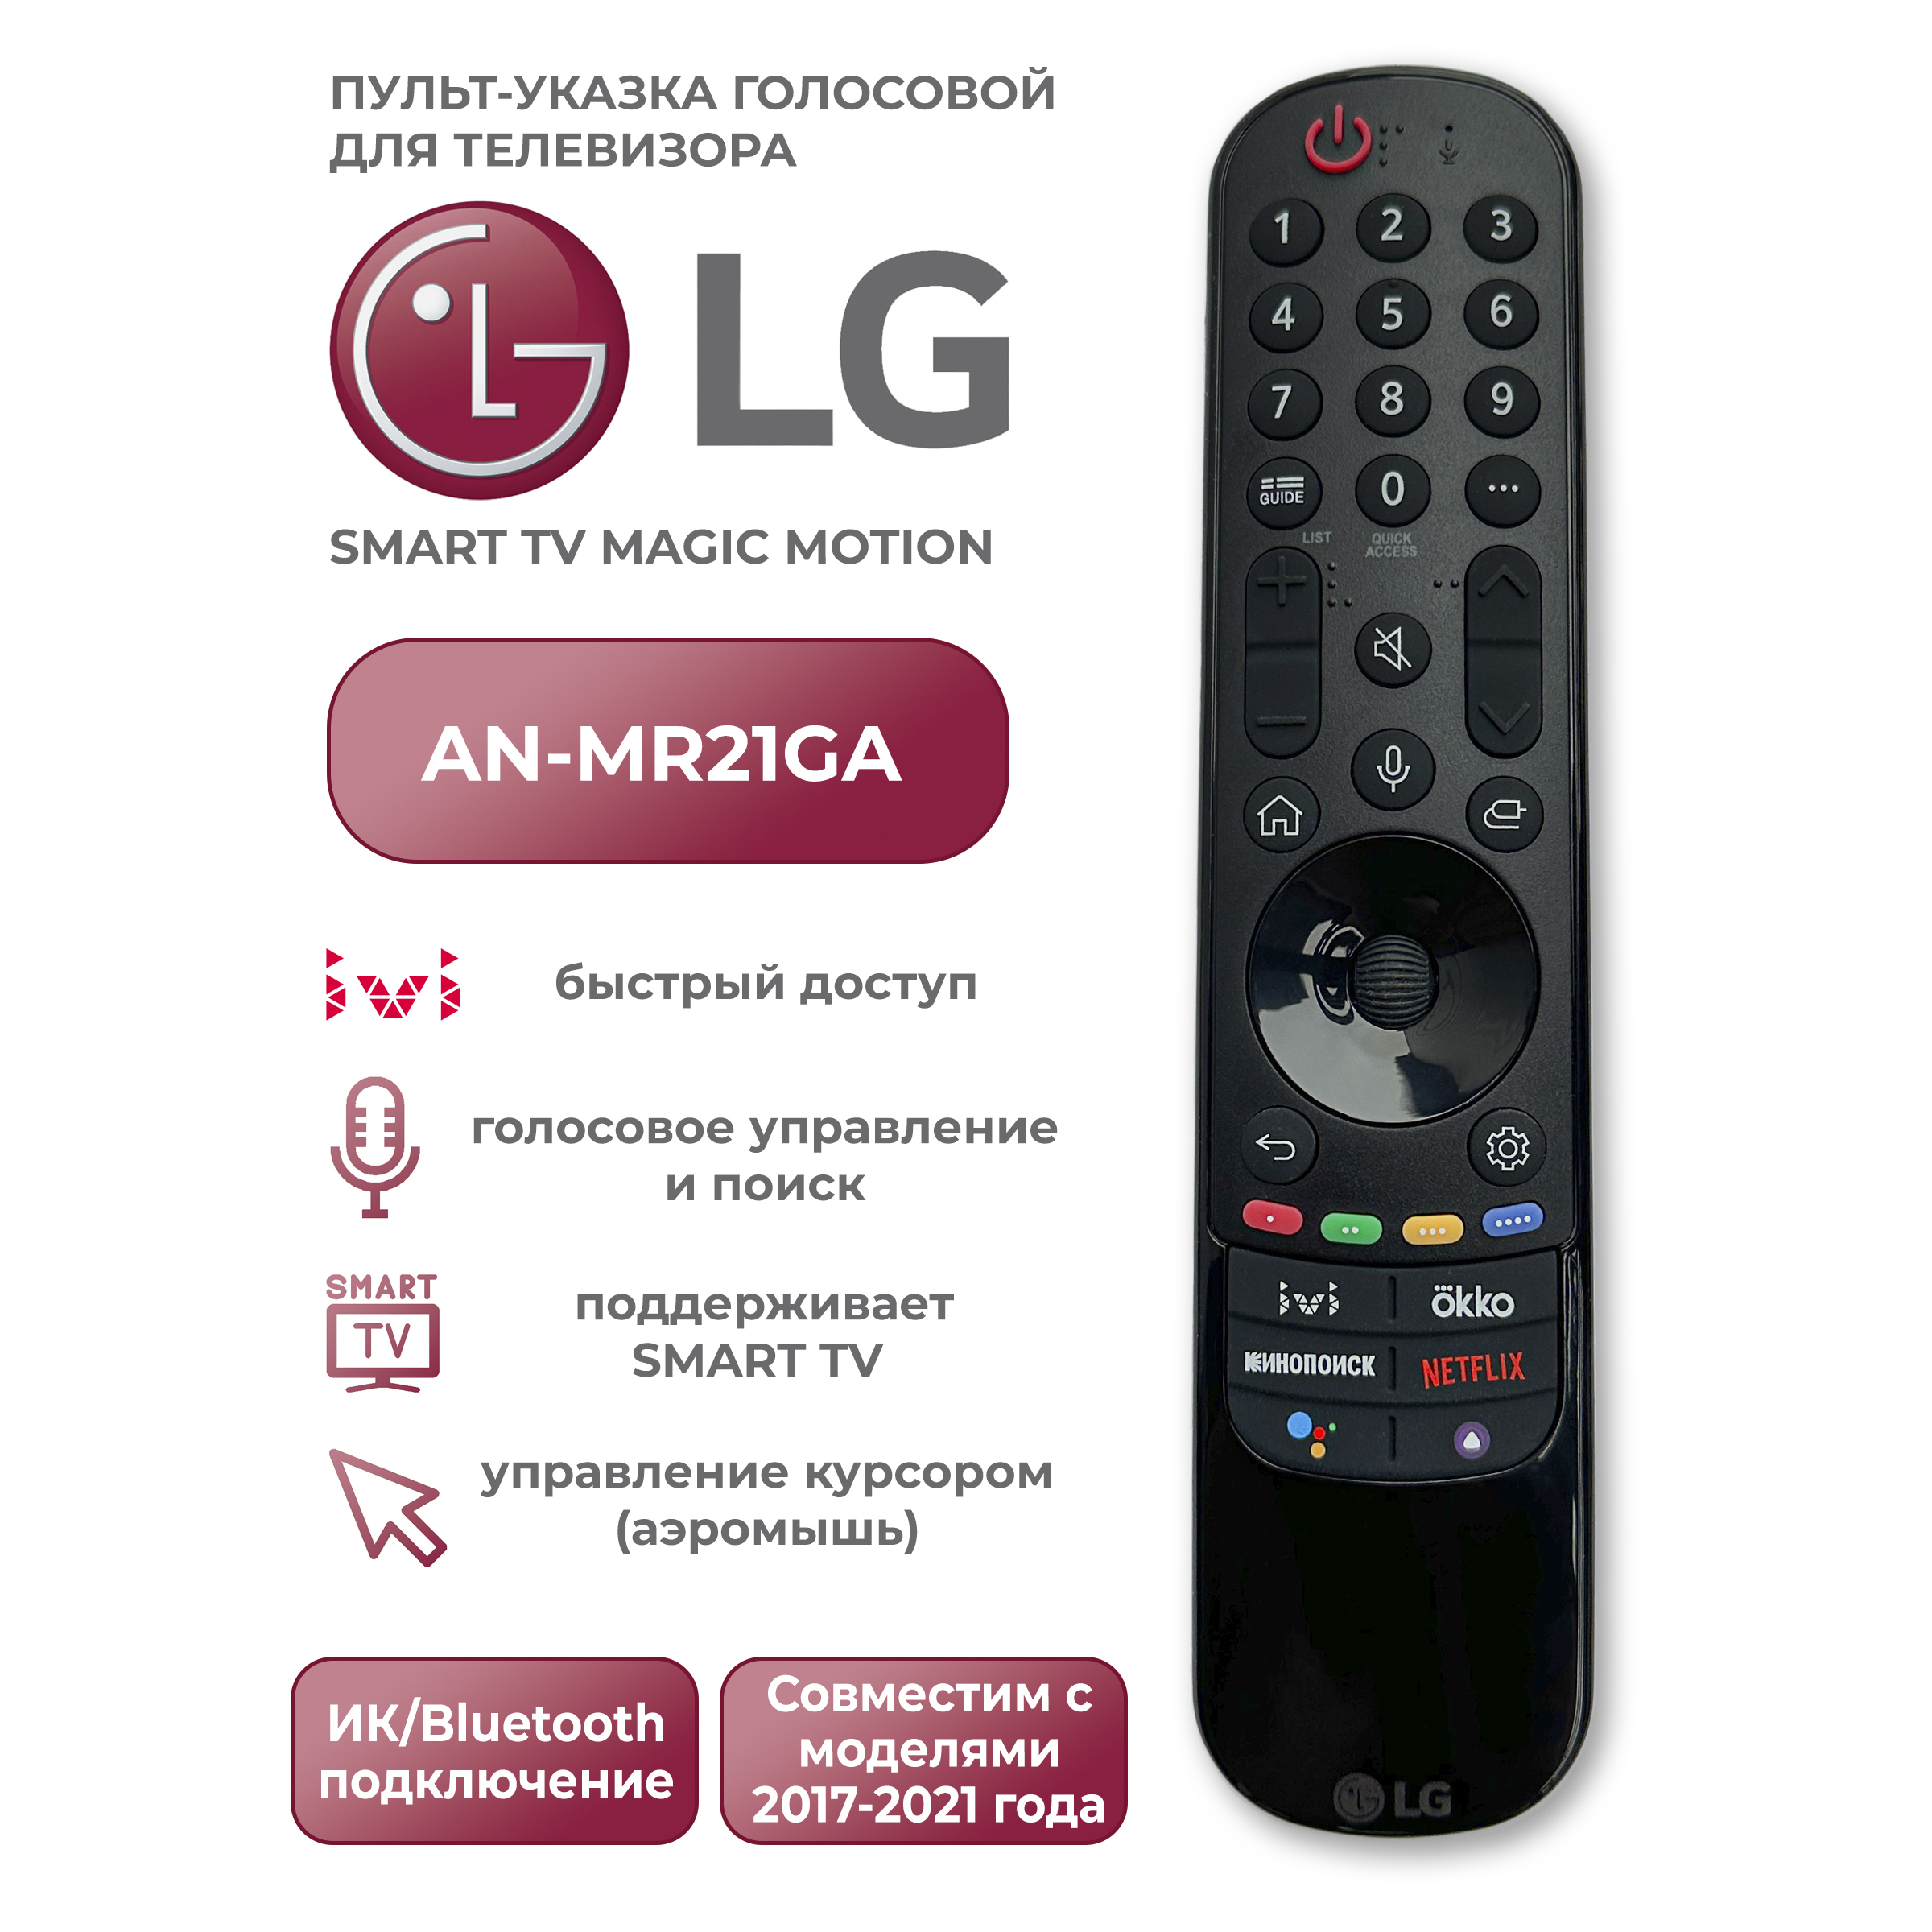 Пульт ду LG Smart TV Magic Motion AN-MR21BA